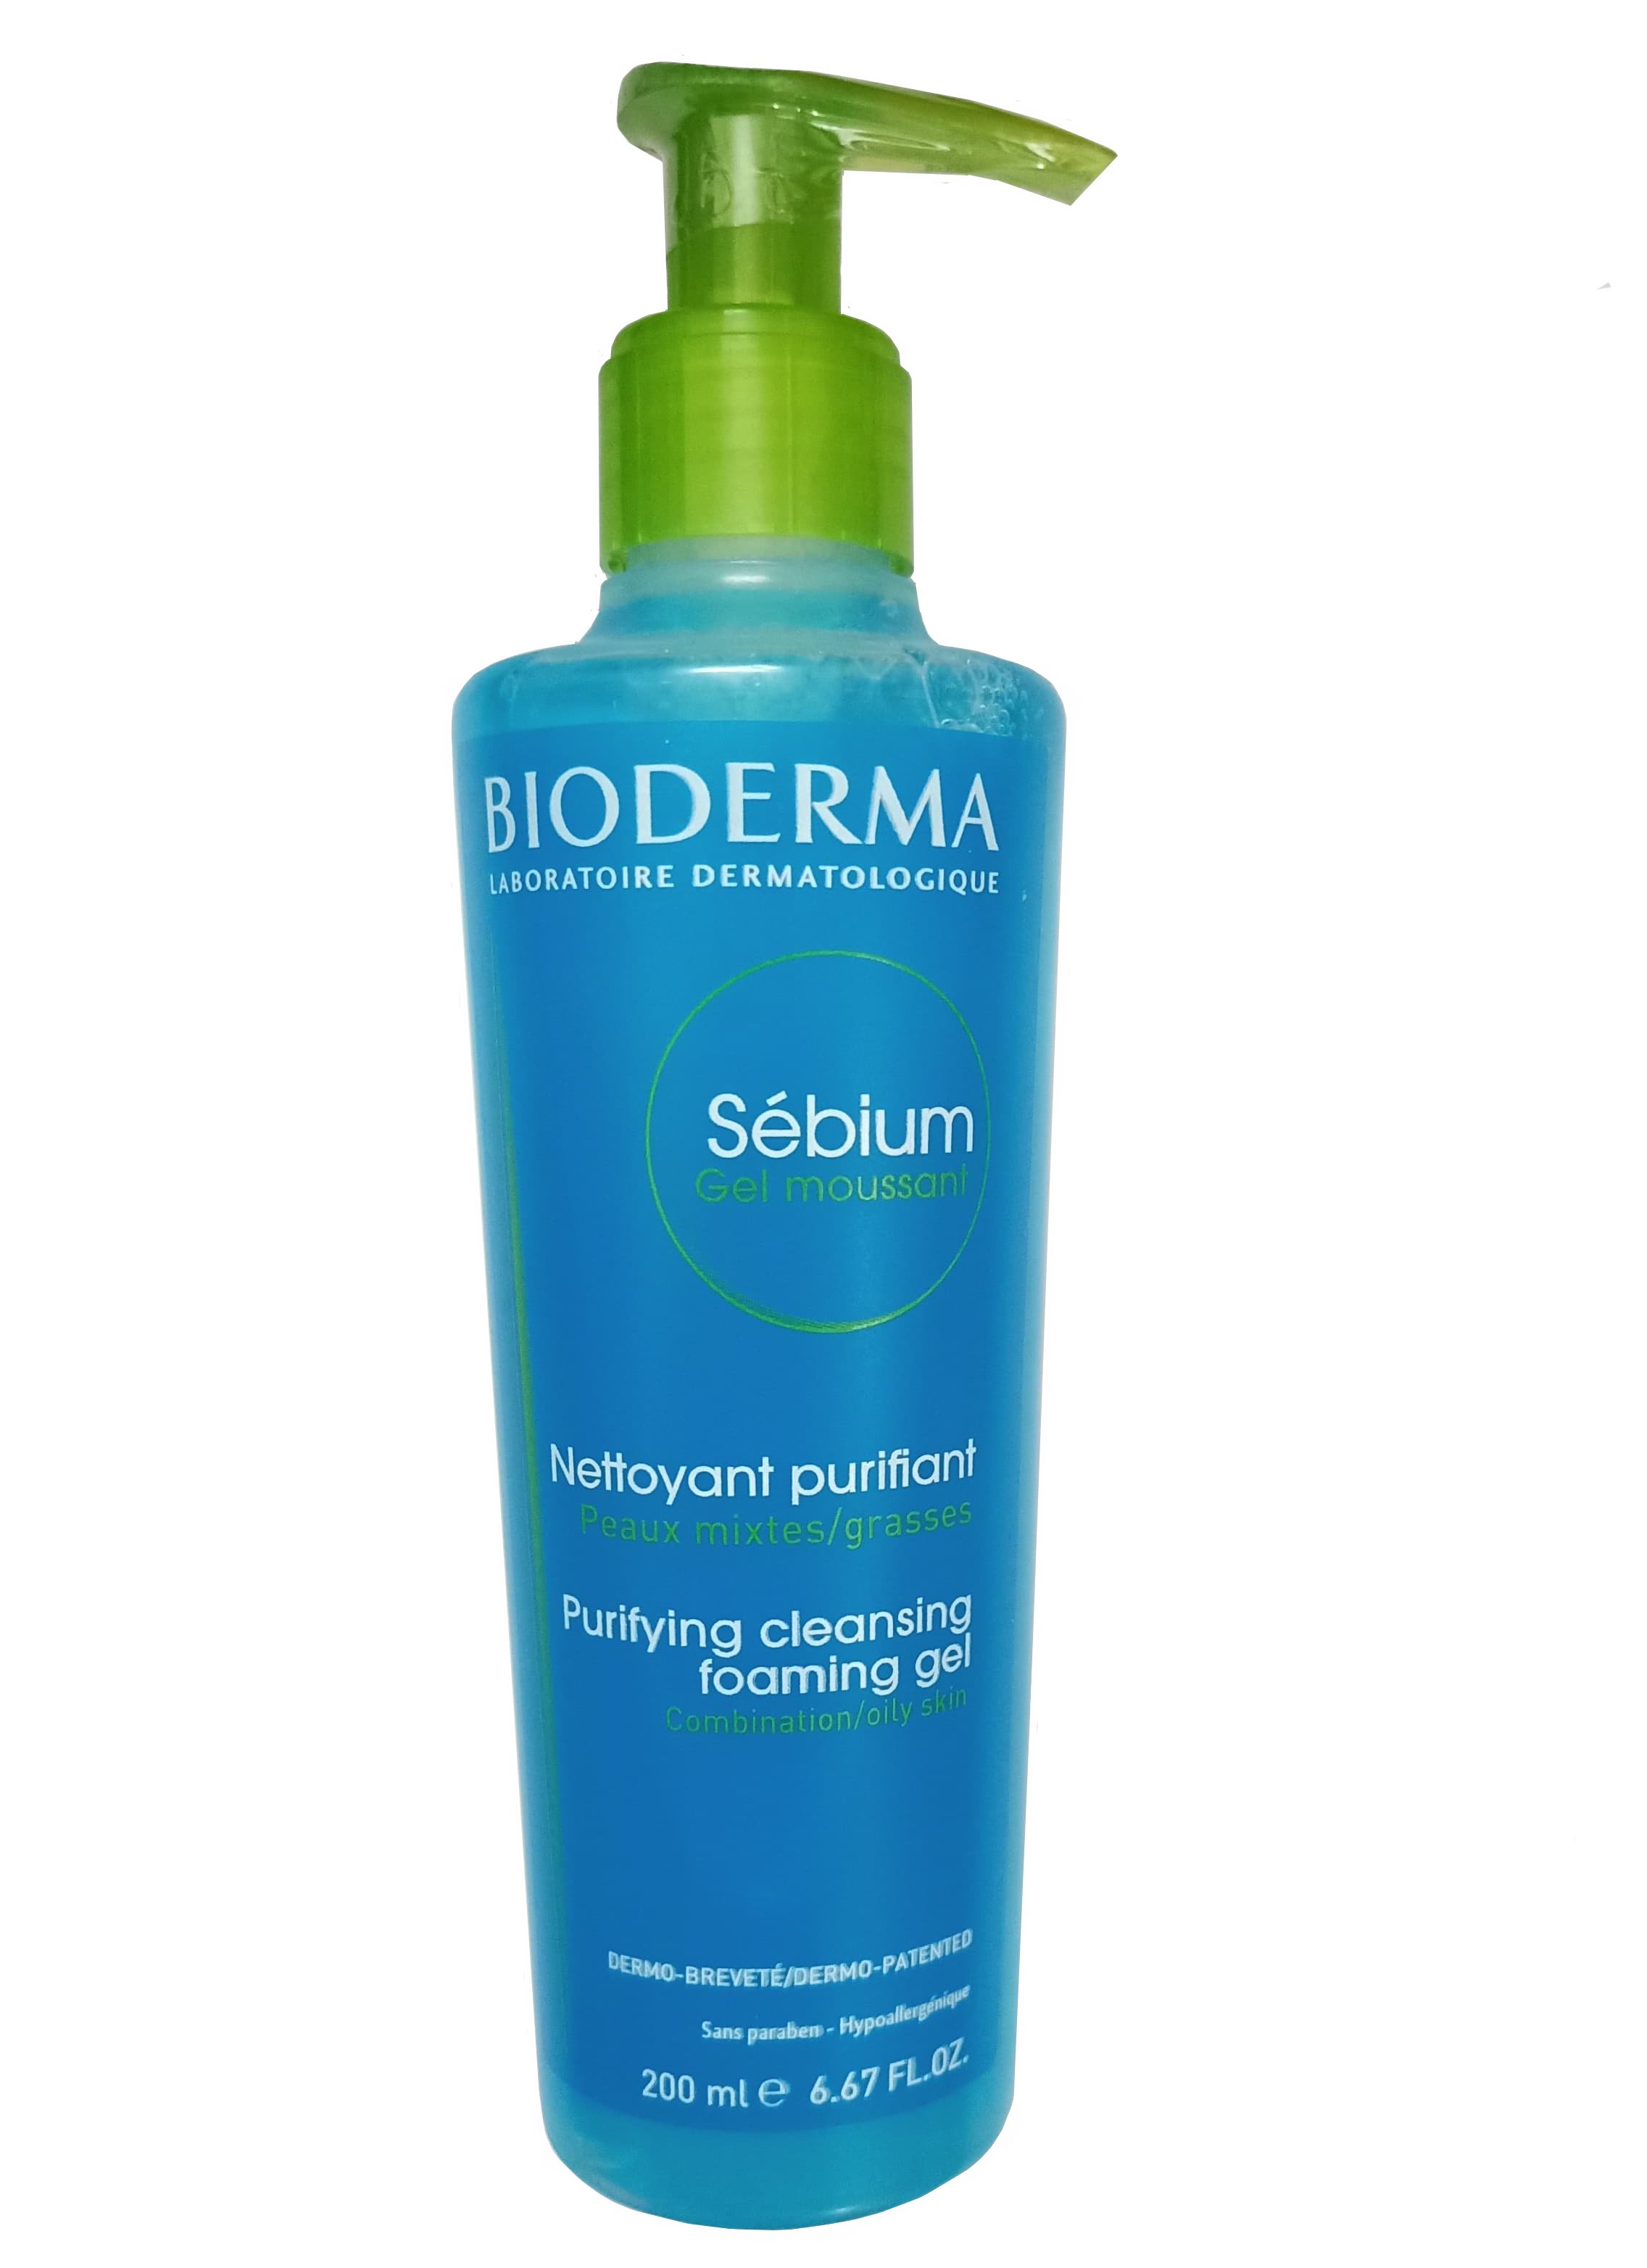 Sữa rửa mặt Bioderma Sebium Foaming Gel 200ml với công thức pH 5.5